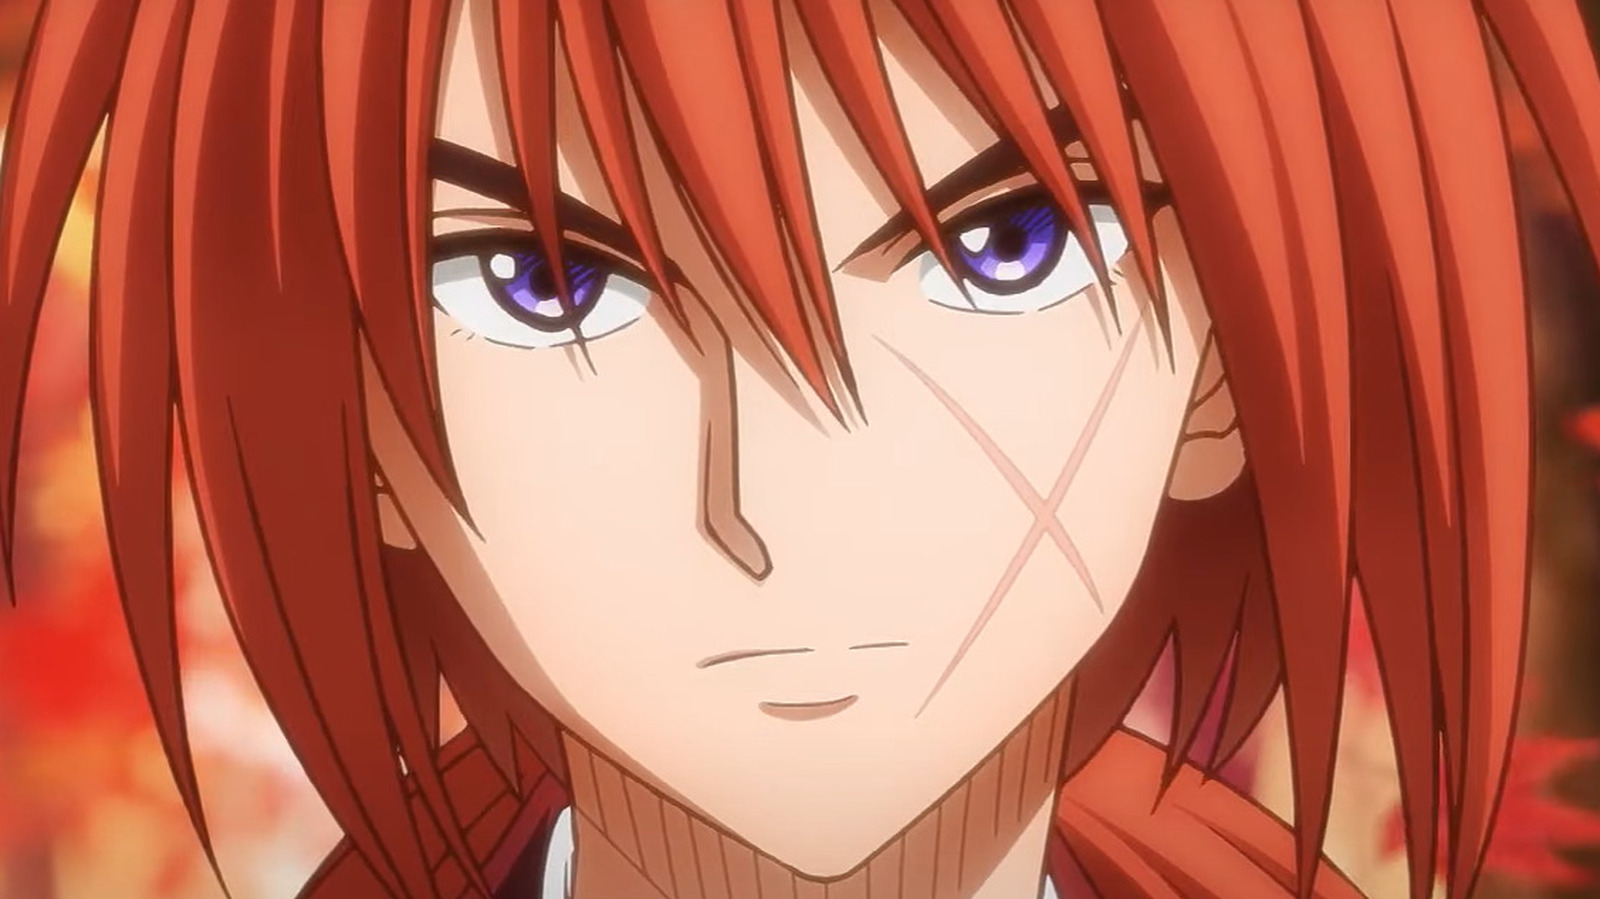 5th 'Rurouni Kenshin' Anime Episode Previewed | The Fandom Post